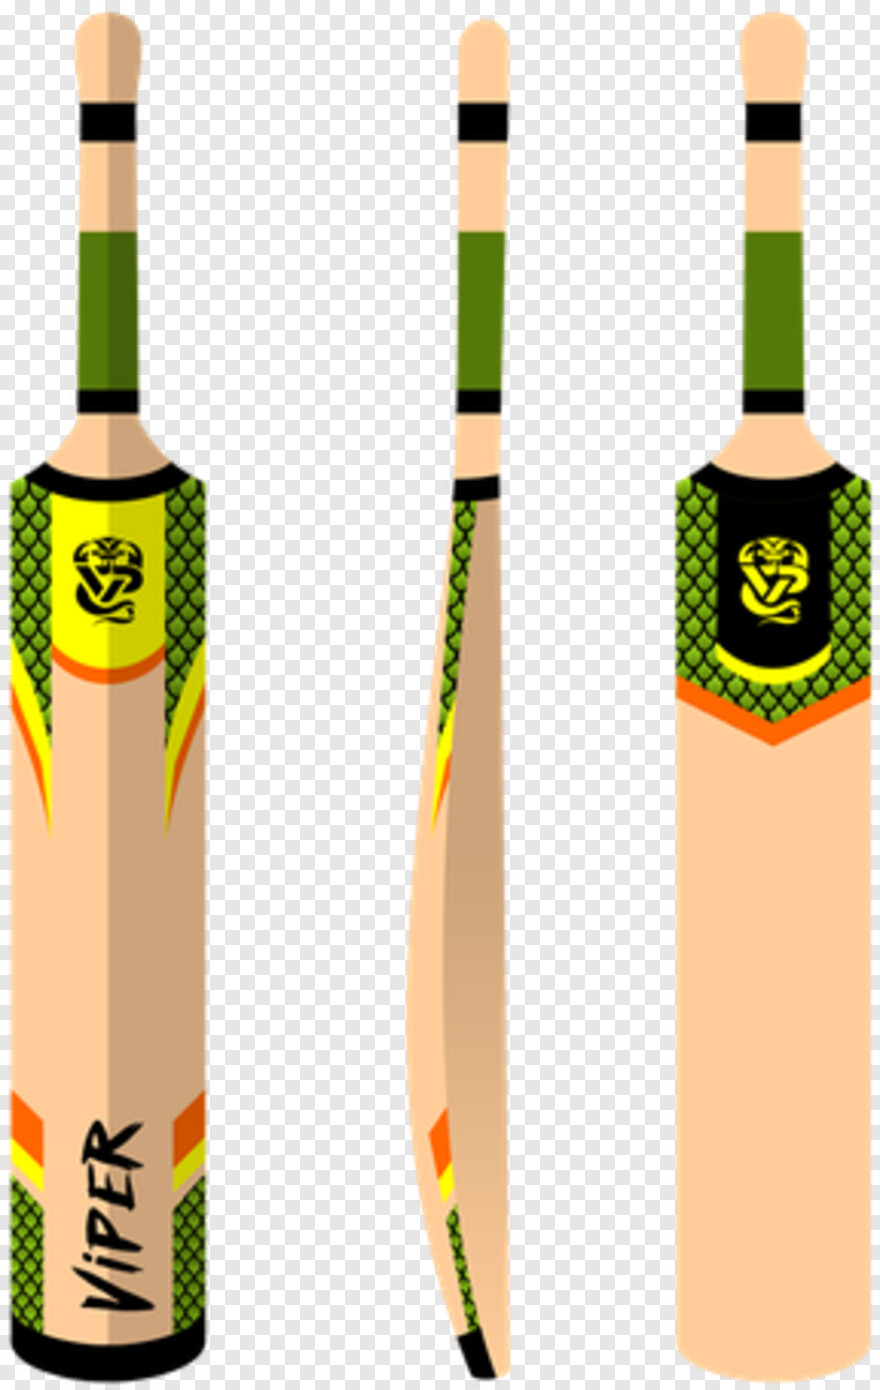  Cricket Clipart, Cricket Images, Cricket Cup, Cricket Bat And Ball, Cricket Vector, Cricket Kit